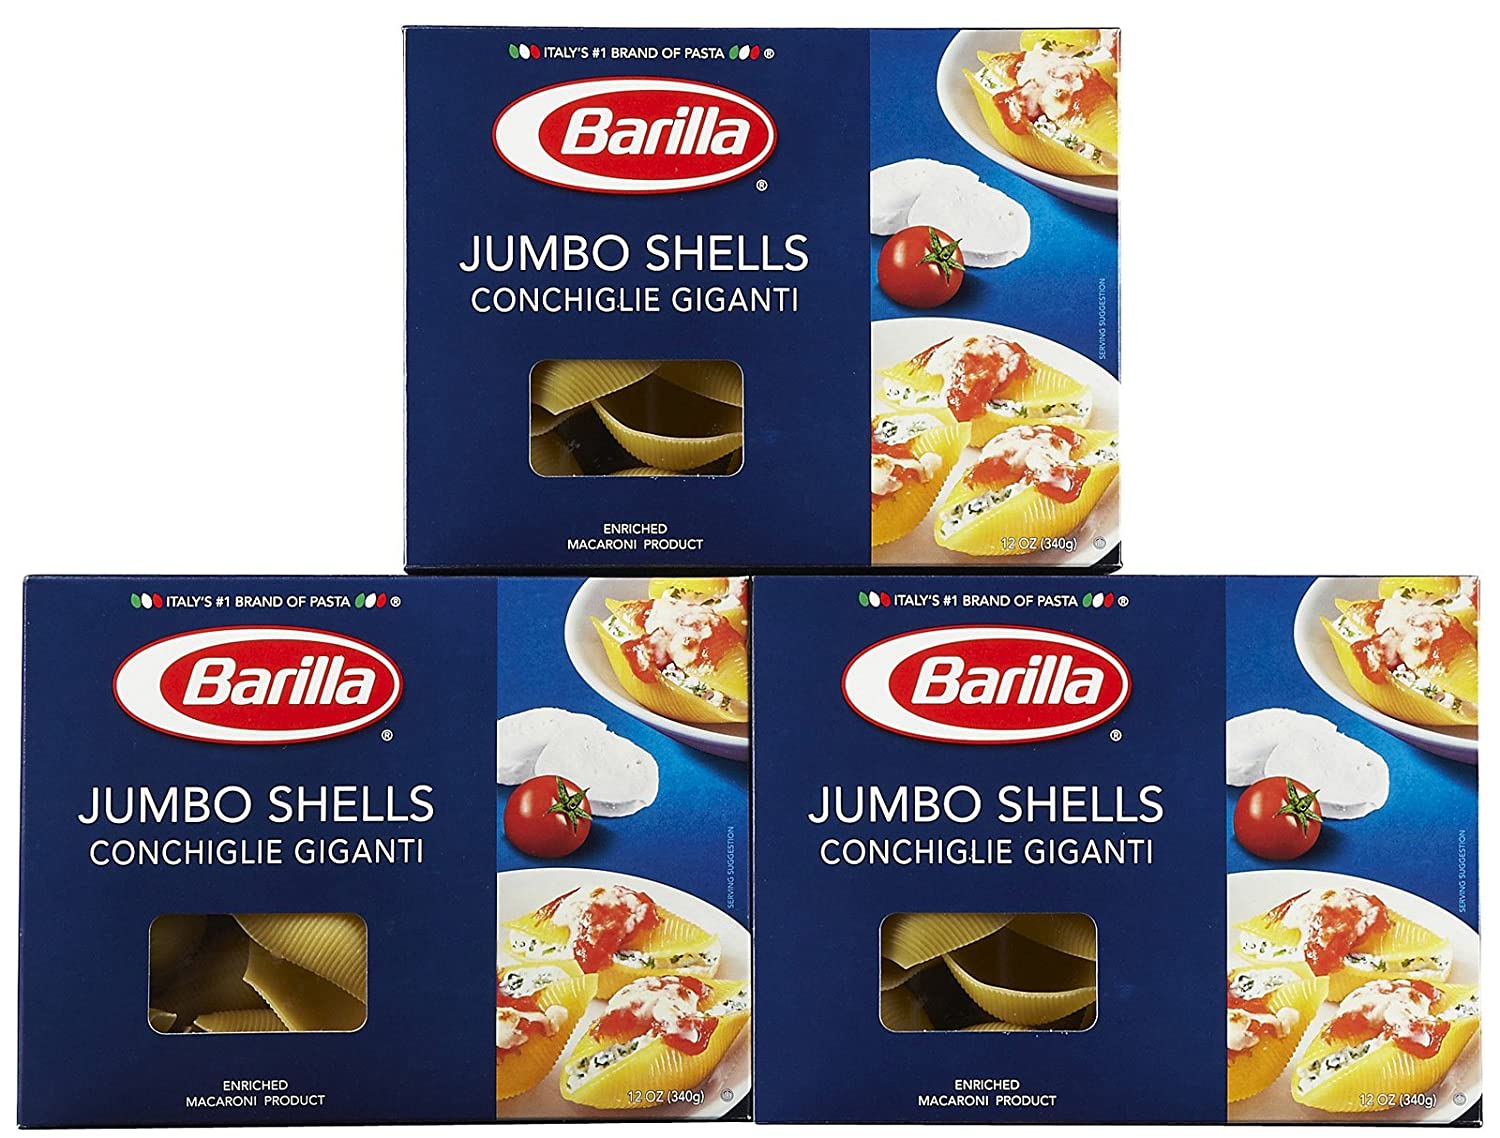 Barilla Jumbo Shells Pasta, 16 oz. Box (Pack of 3) - Italy's #1 Pasta Brand